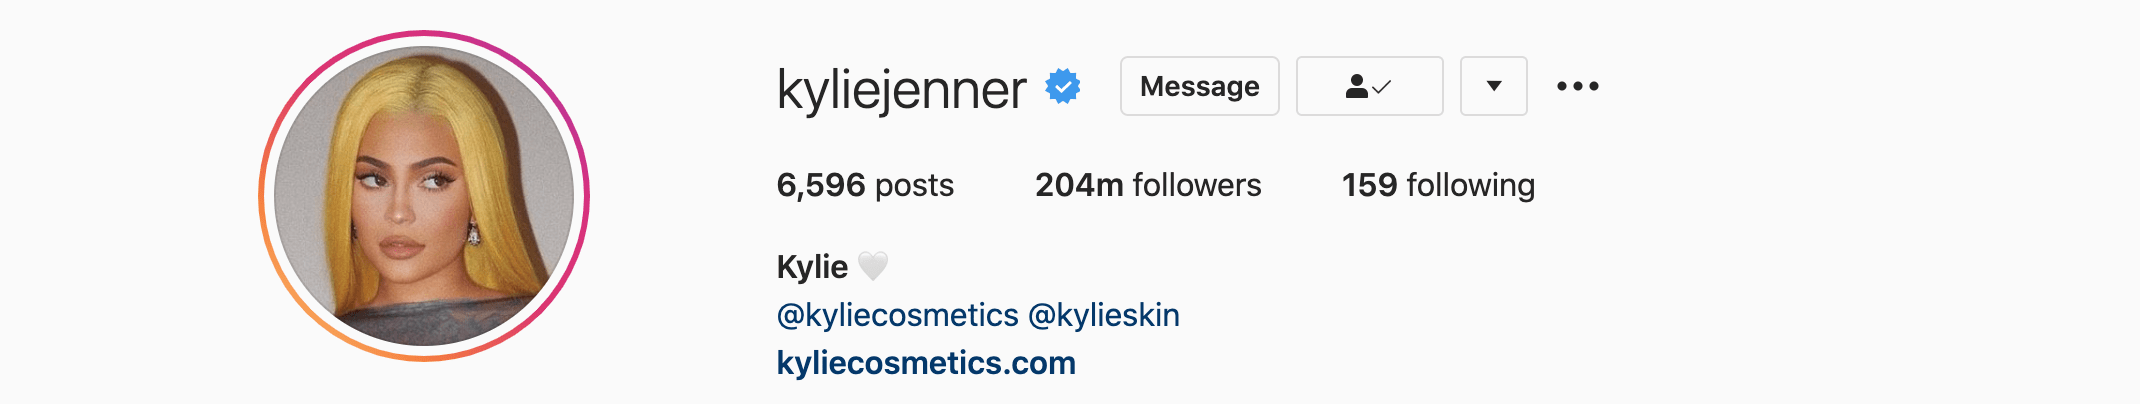 Top Instagram Influencers - Kylie Jenner